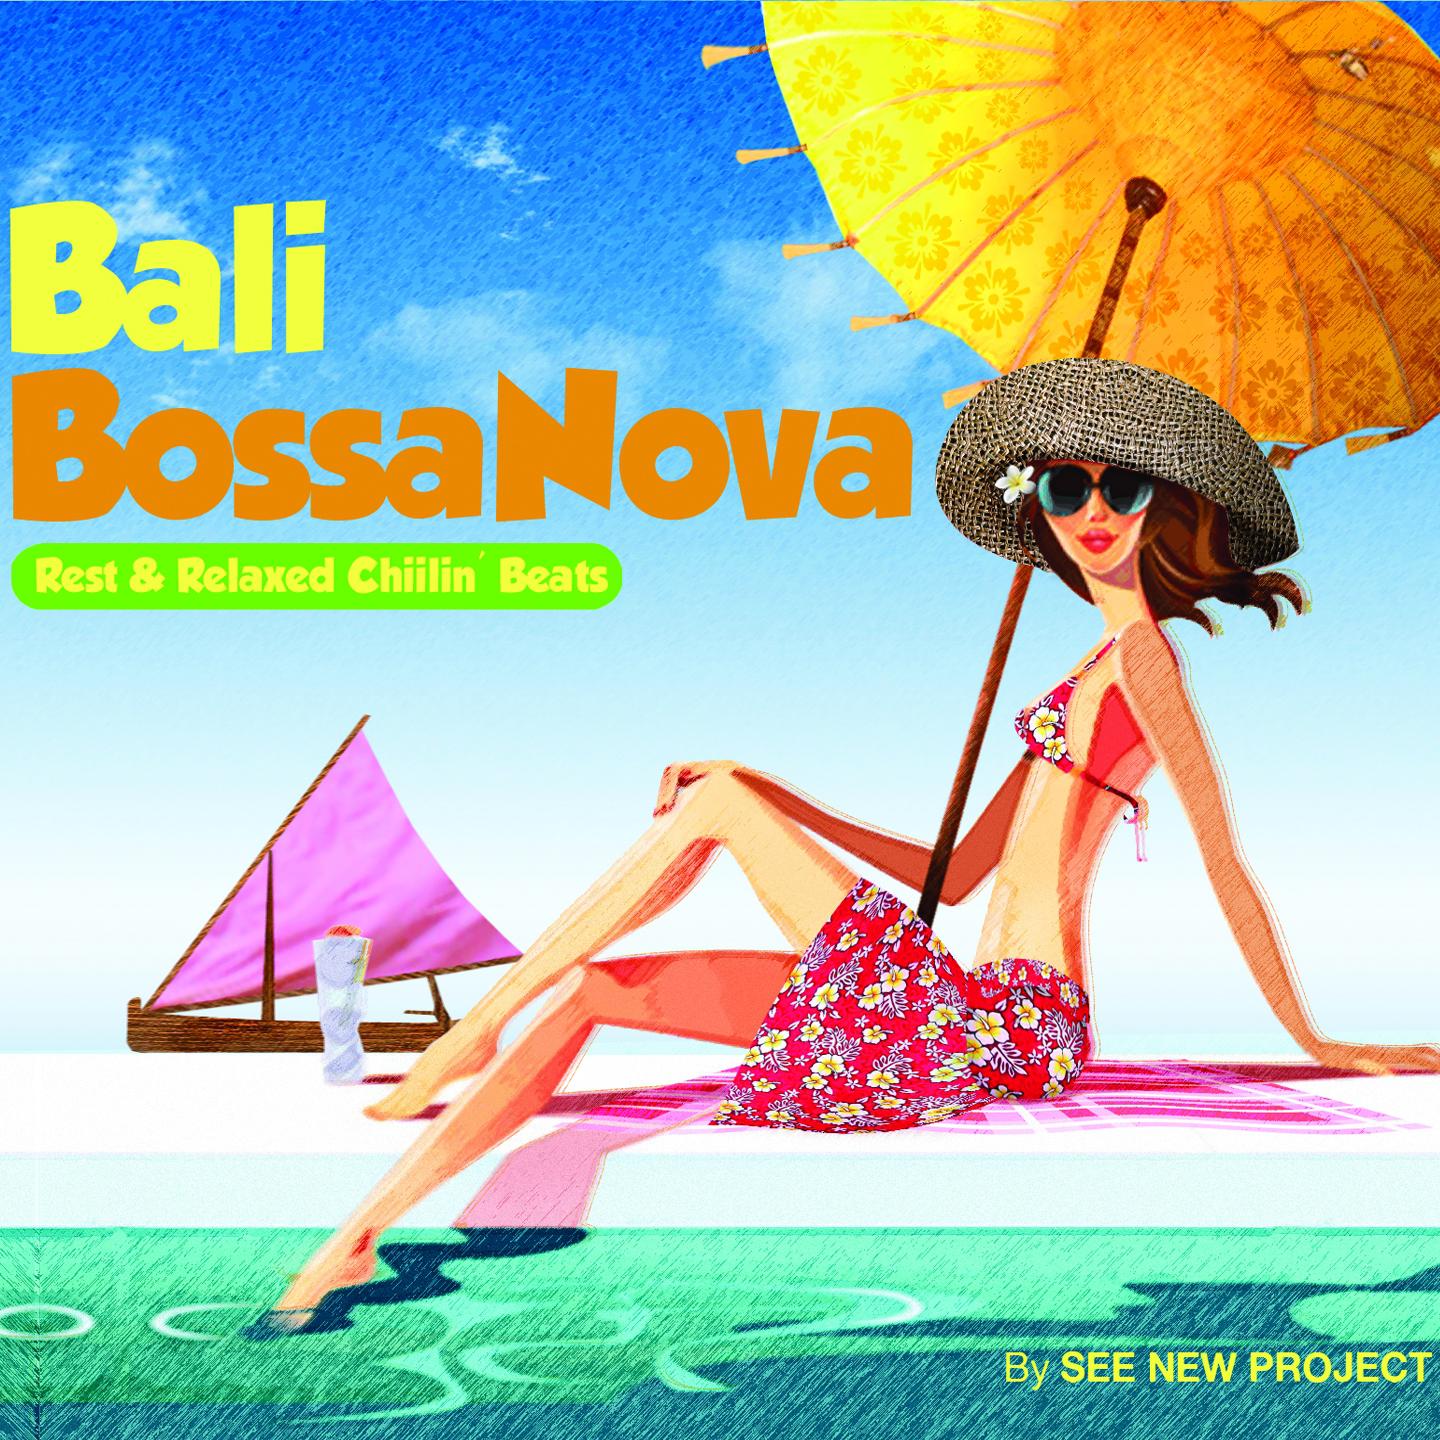 Bali Bossanova